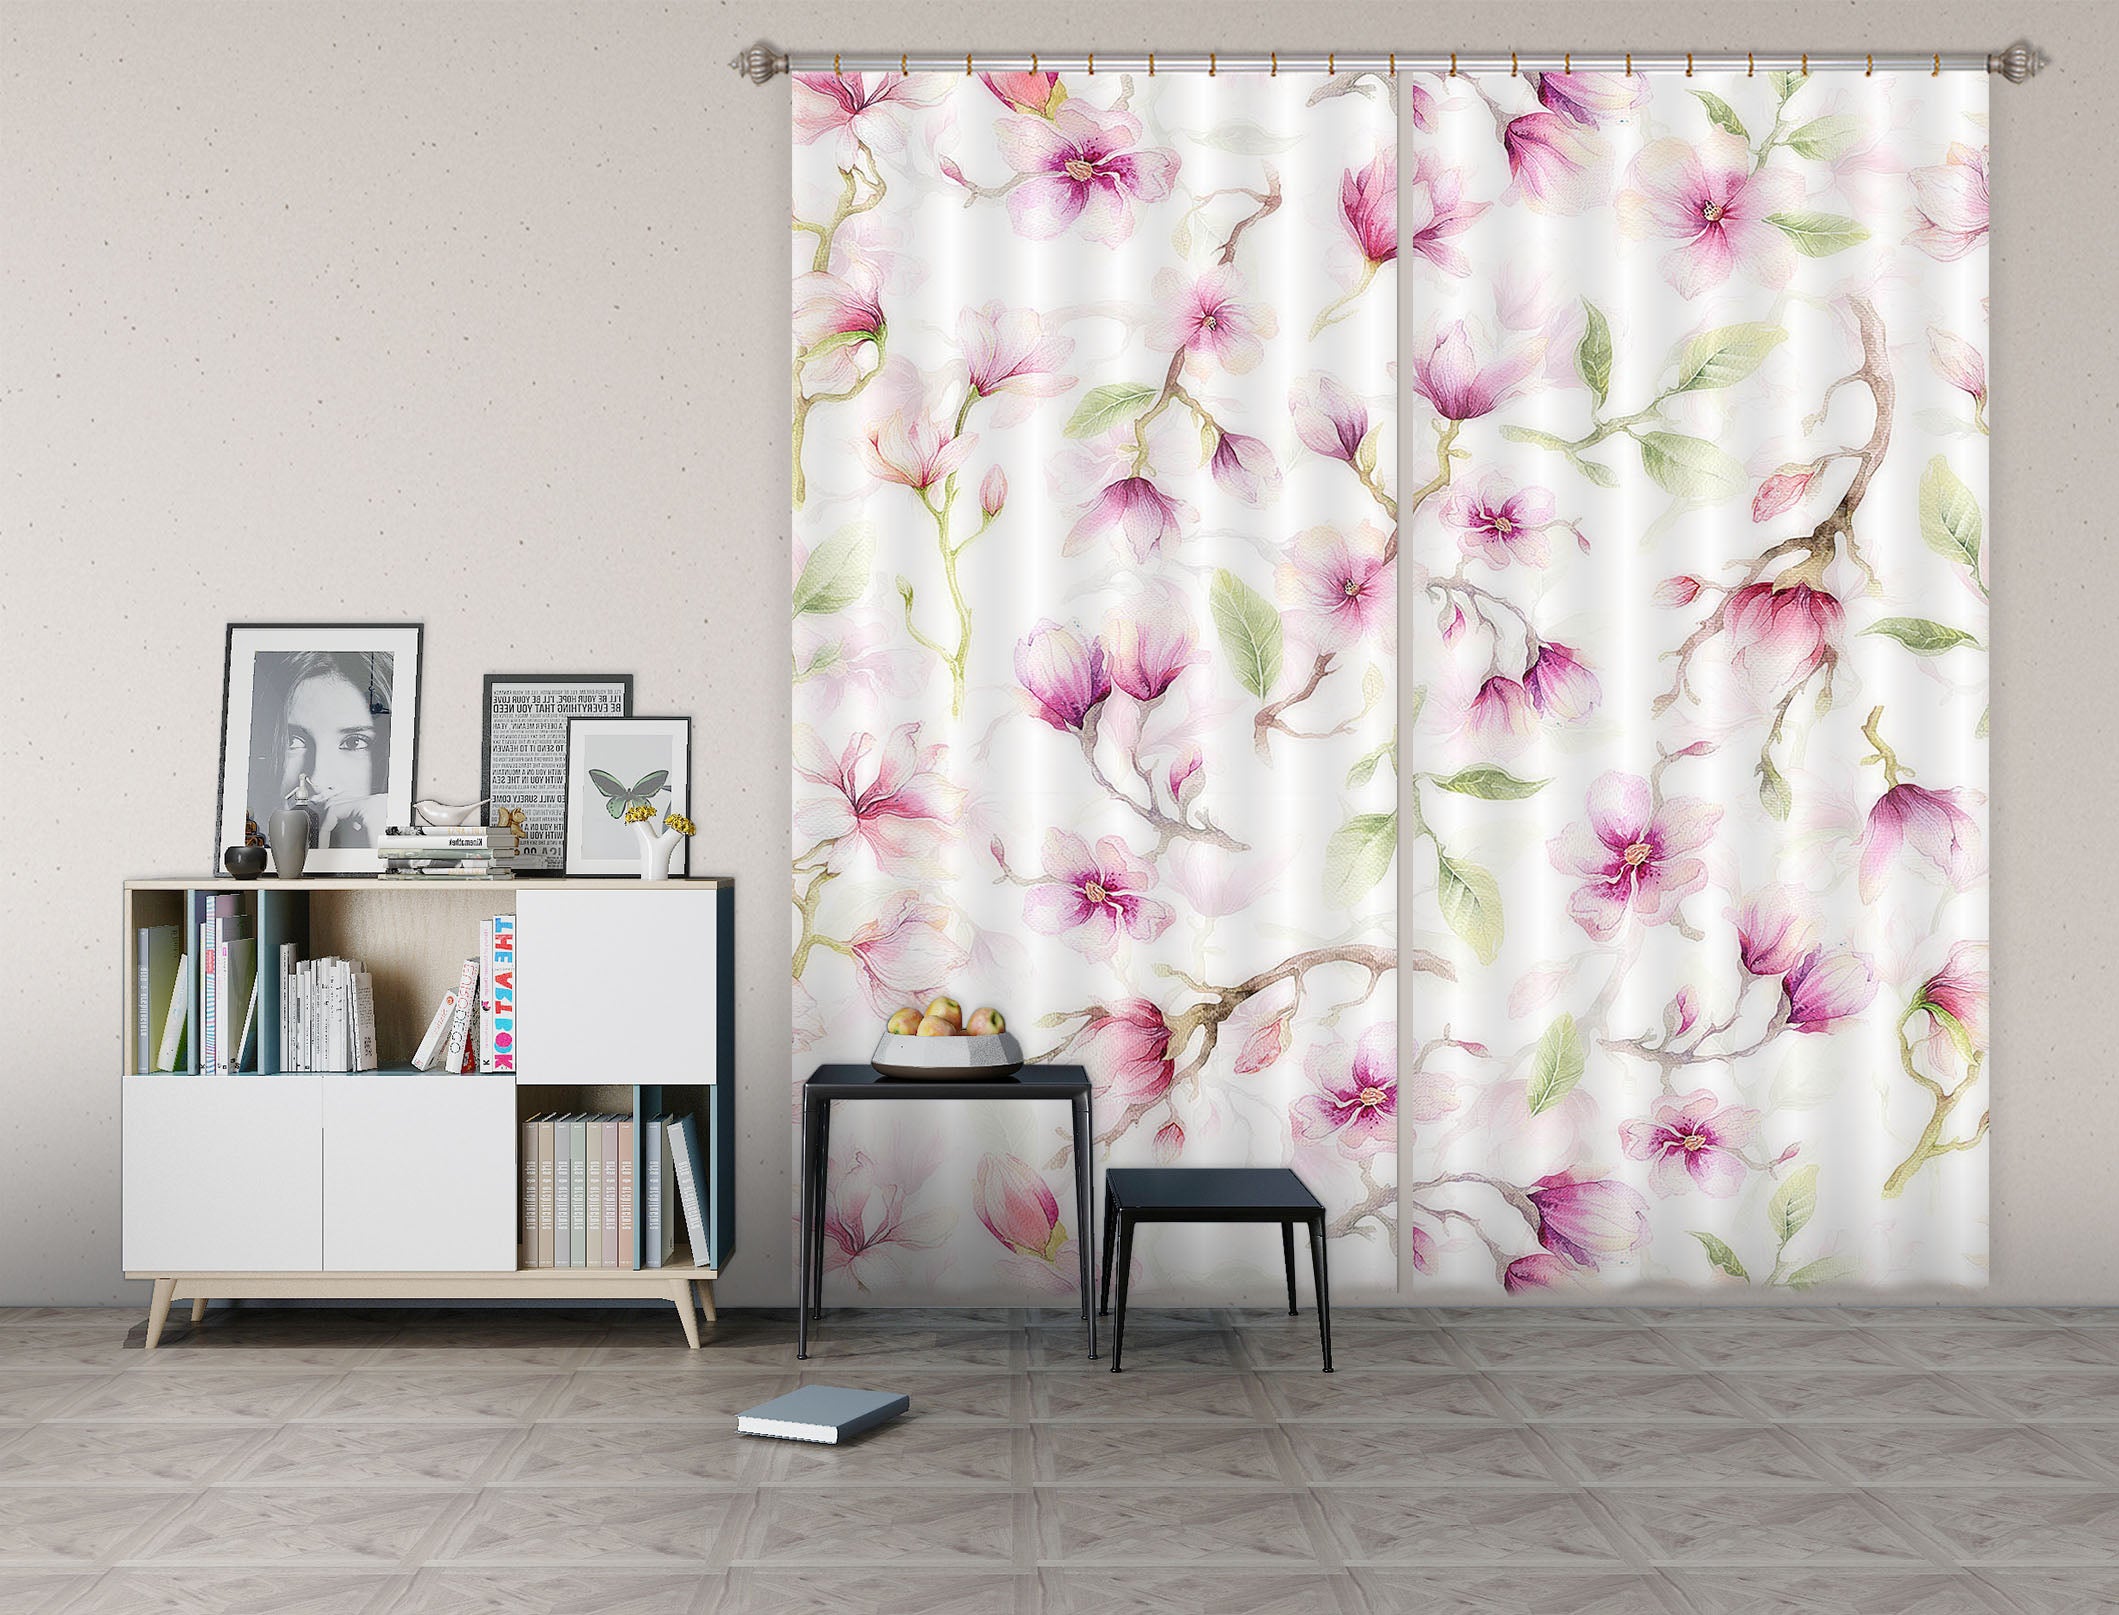 3D Beautiful Flower 250 Uta Naumann Curtain Curtains Drapes